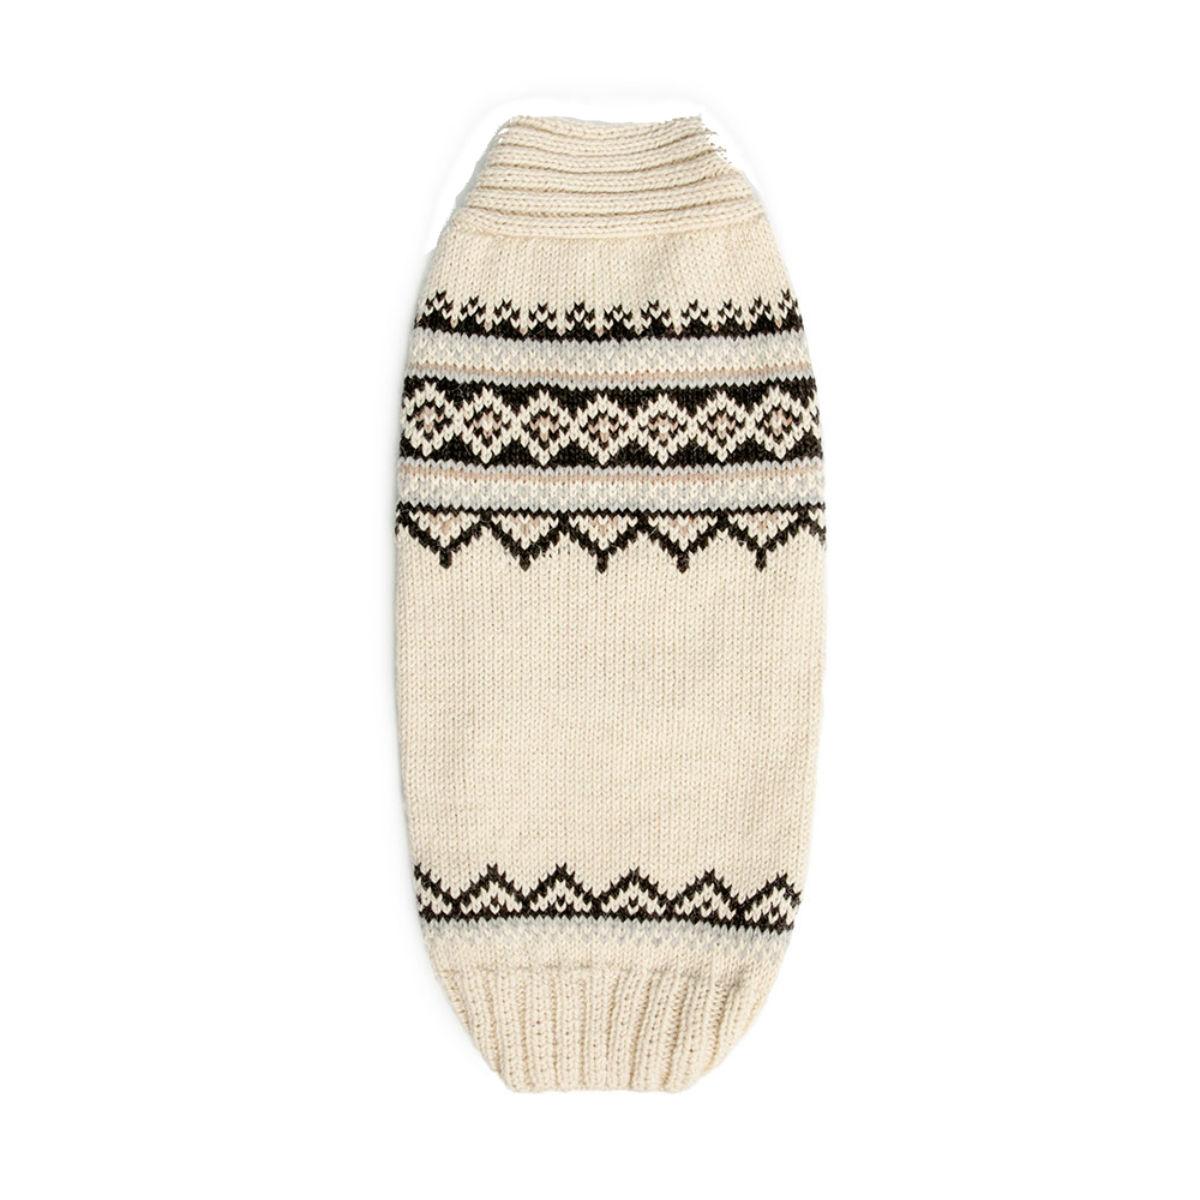 Chilly Dog Handmade Alpaca Wool Wyatt Dog Sweater - Cream